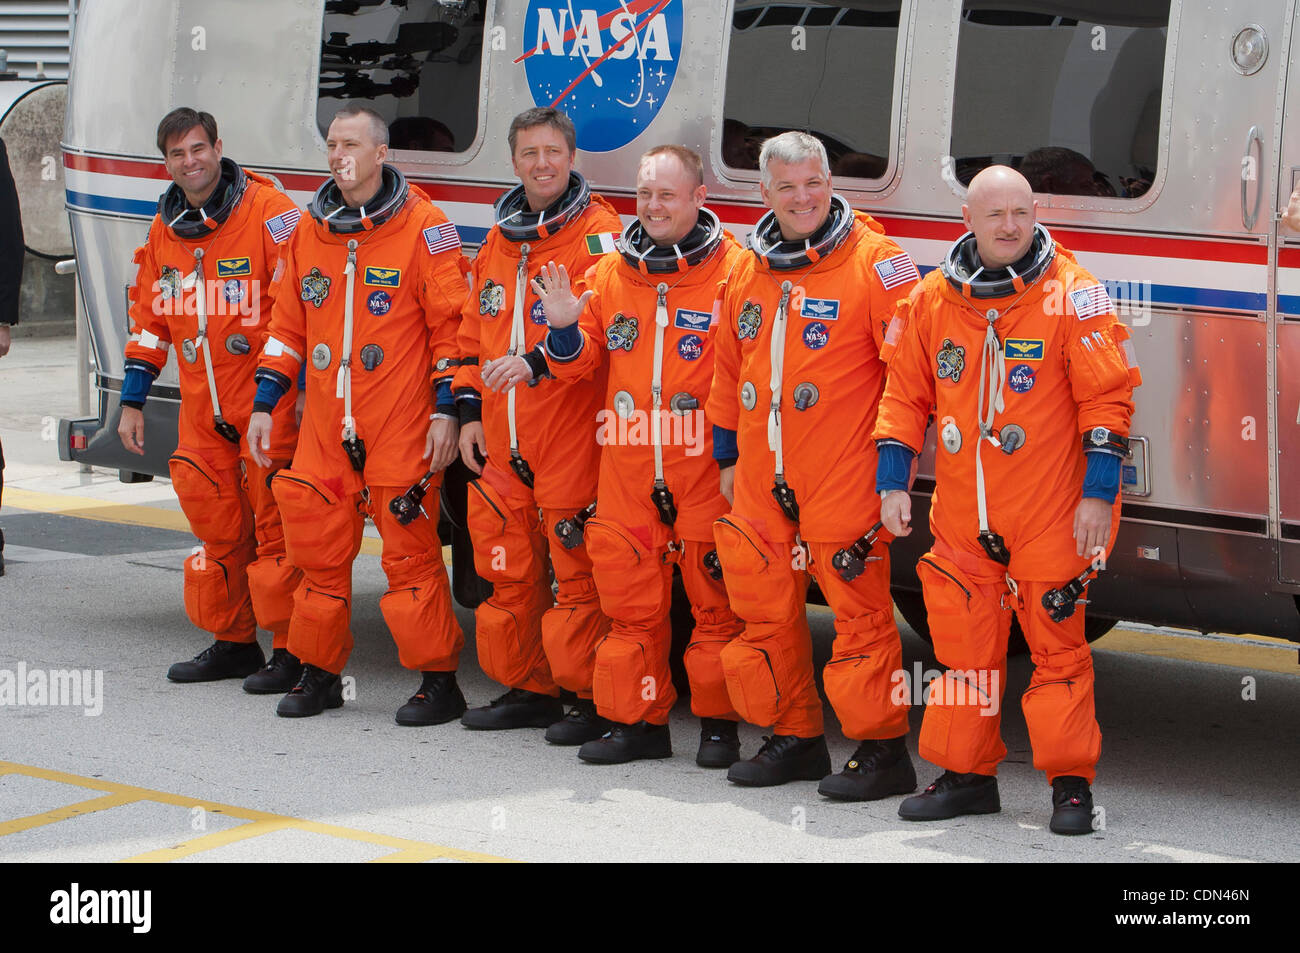 April 29, 2011 - Cape Canaveral, Florida, U.S. - Space Shuttle Endeavor STS-134 Astronauts, L-R, Canadian born U.S. astronaut GREG CHAMITOFF, mission specialist DREW FEUSTEL, European Space Agency astronaut ROBERTO VITTORI of Italy, mission specialist MIKE FINCKE, British born U.S. astronaut, pilot  Stock Photo